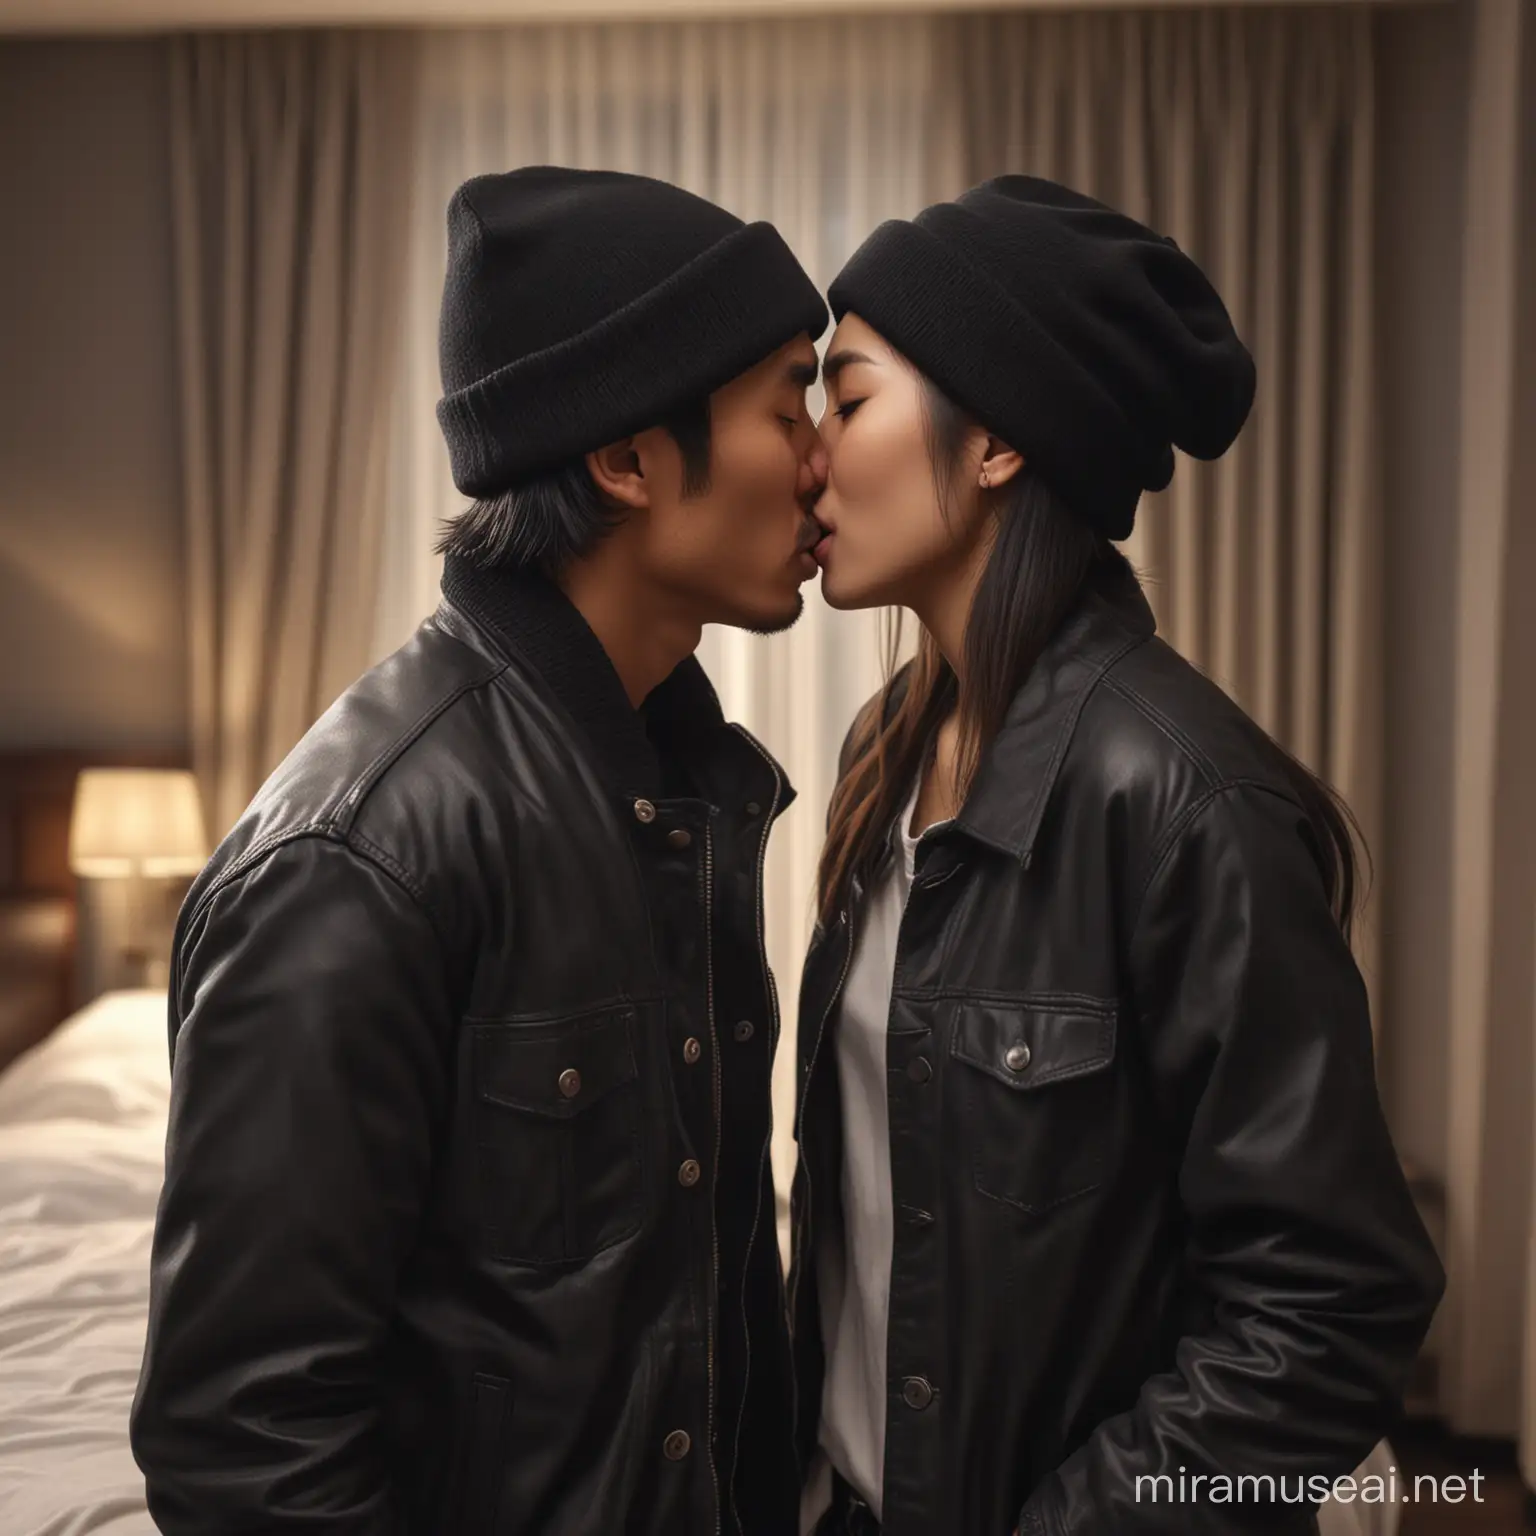 Romantic Asian Couple in Photorealistic Hotel Room